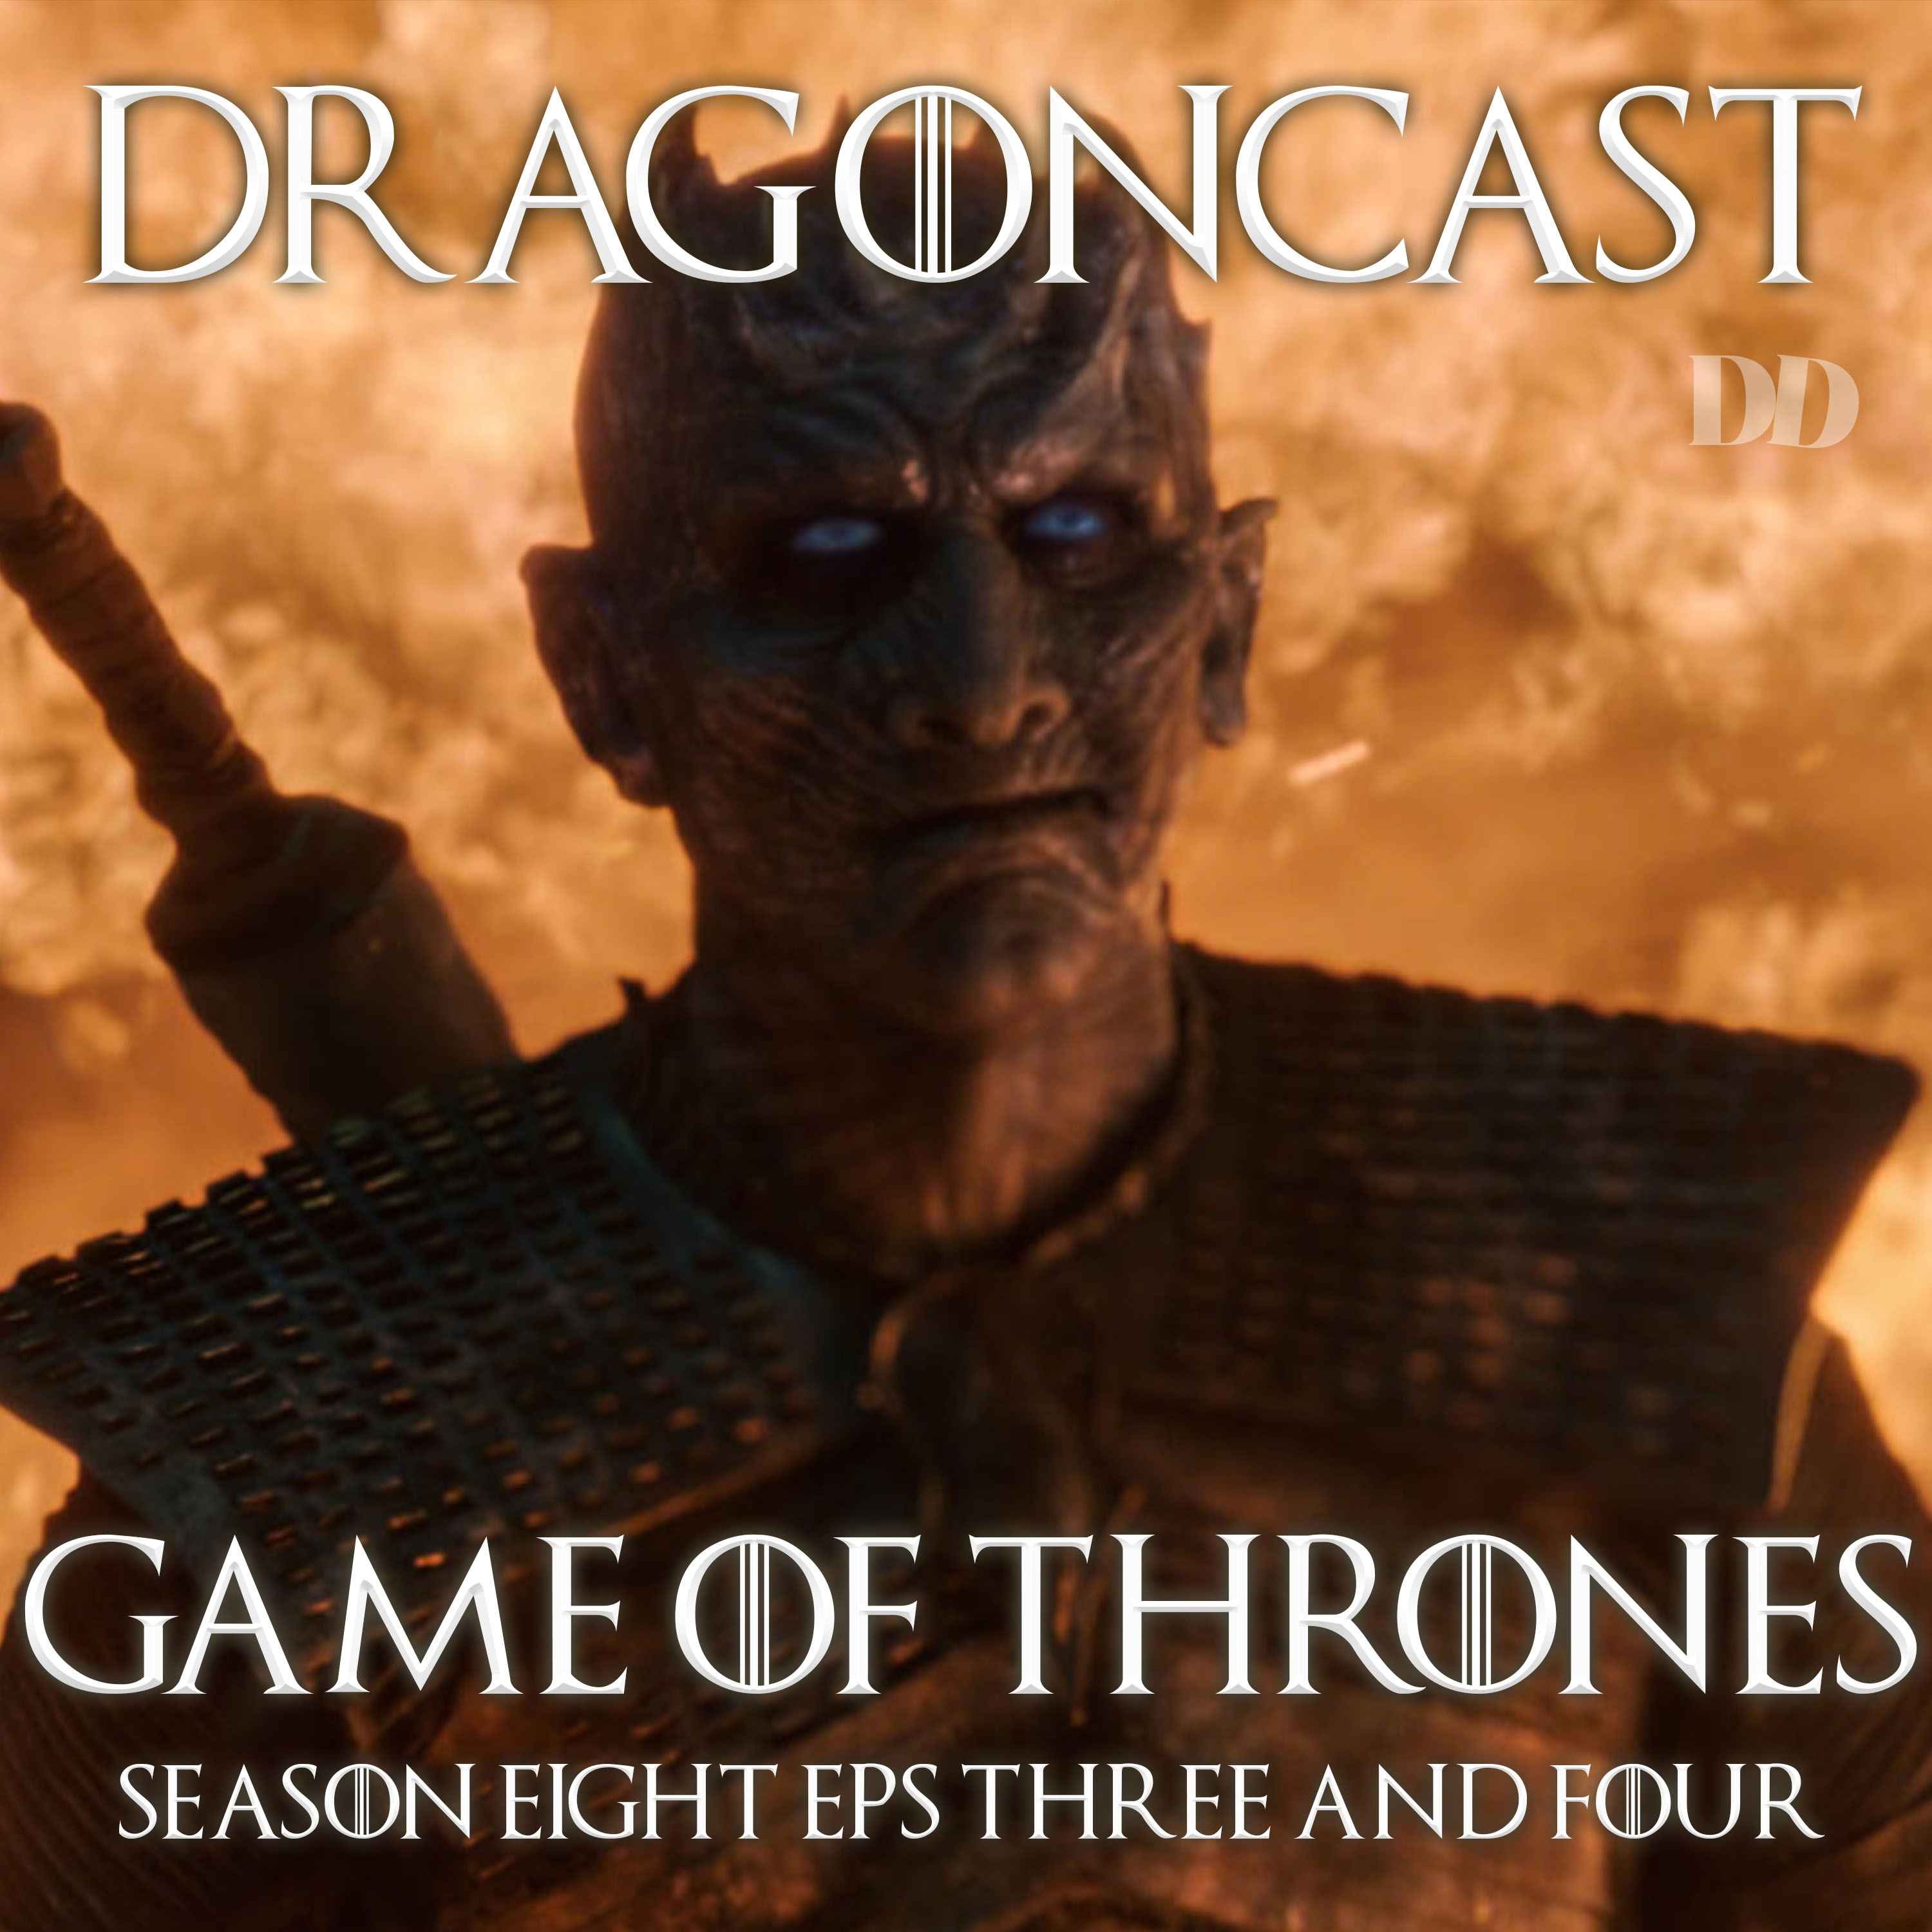 Game of Thrones Rewatch Episode: S8 E3&4